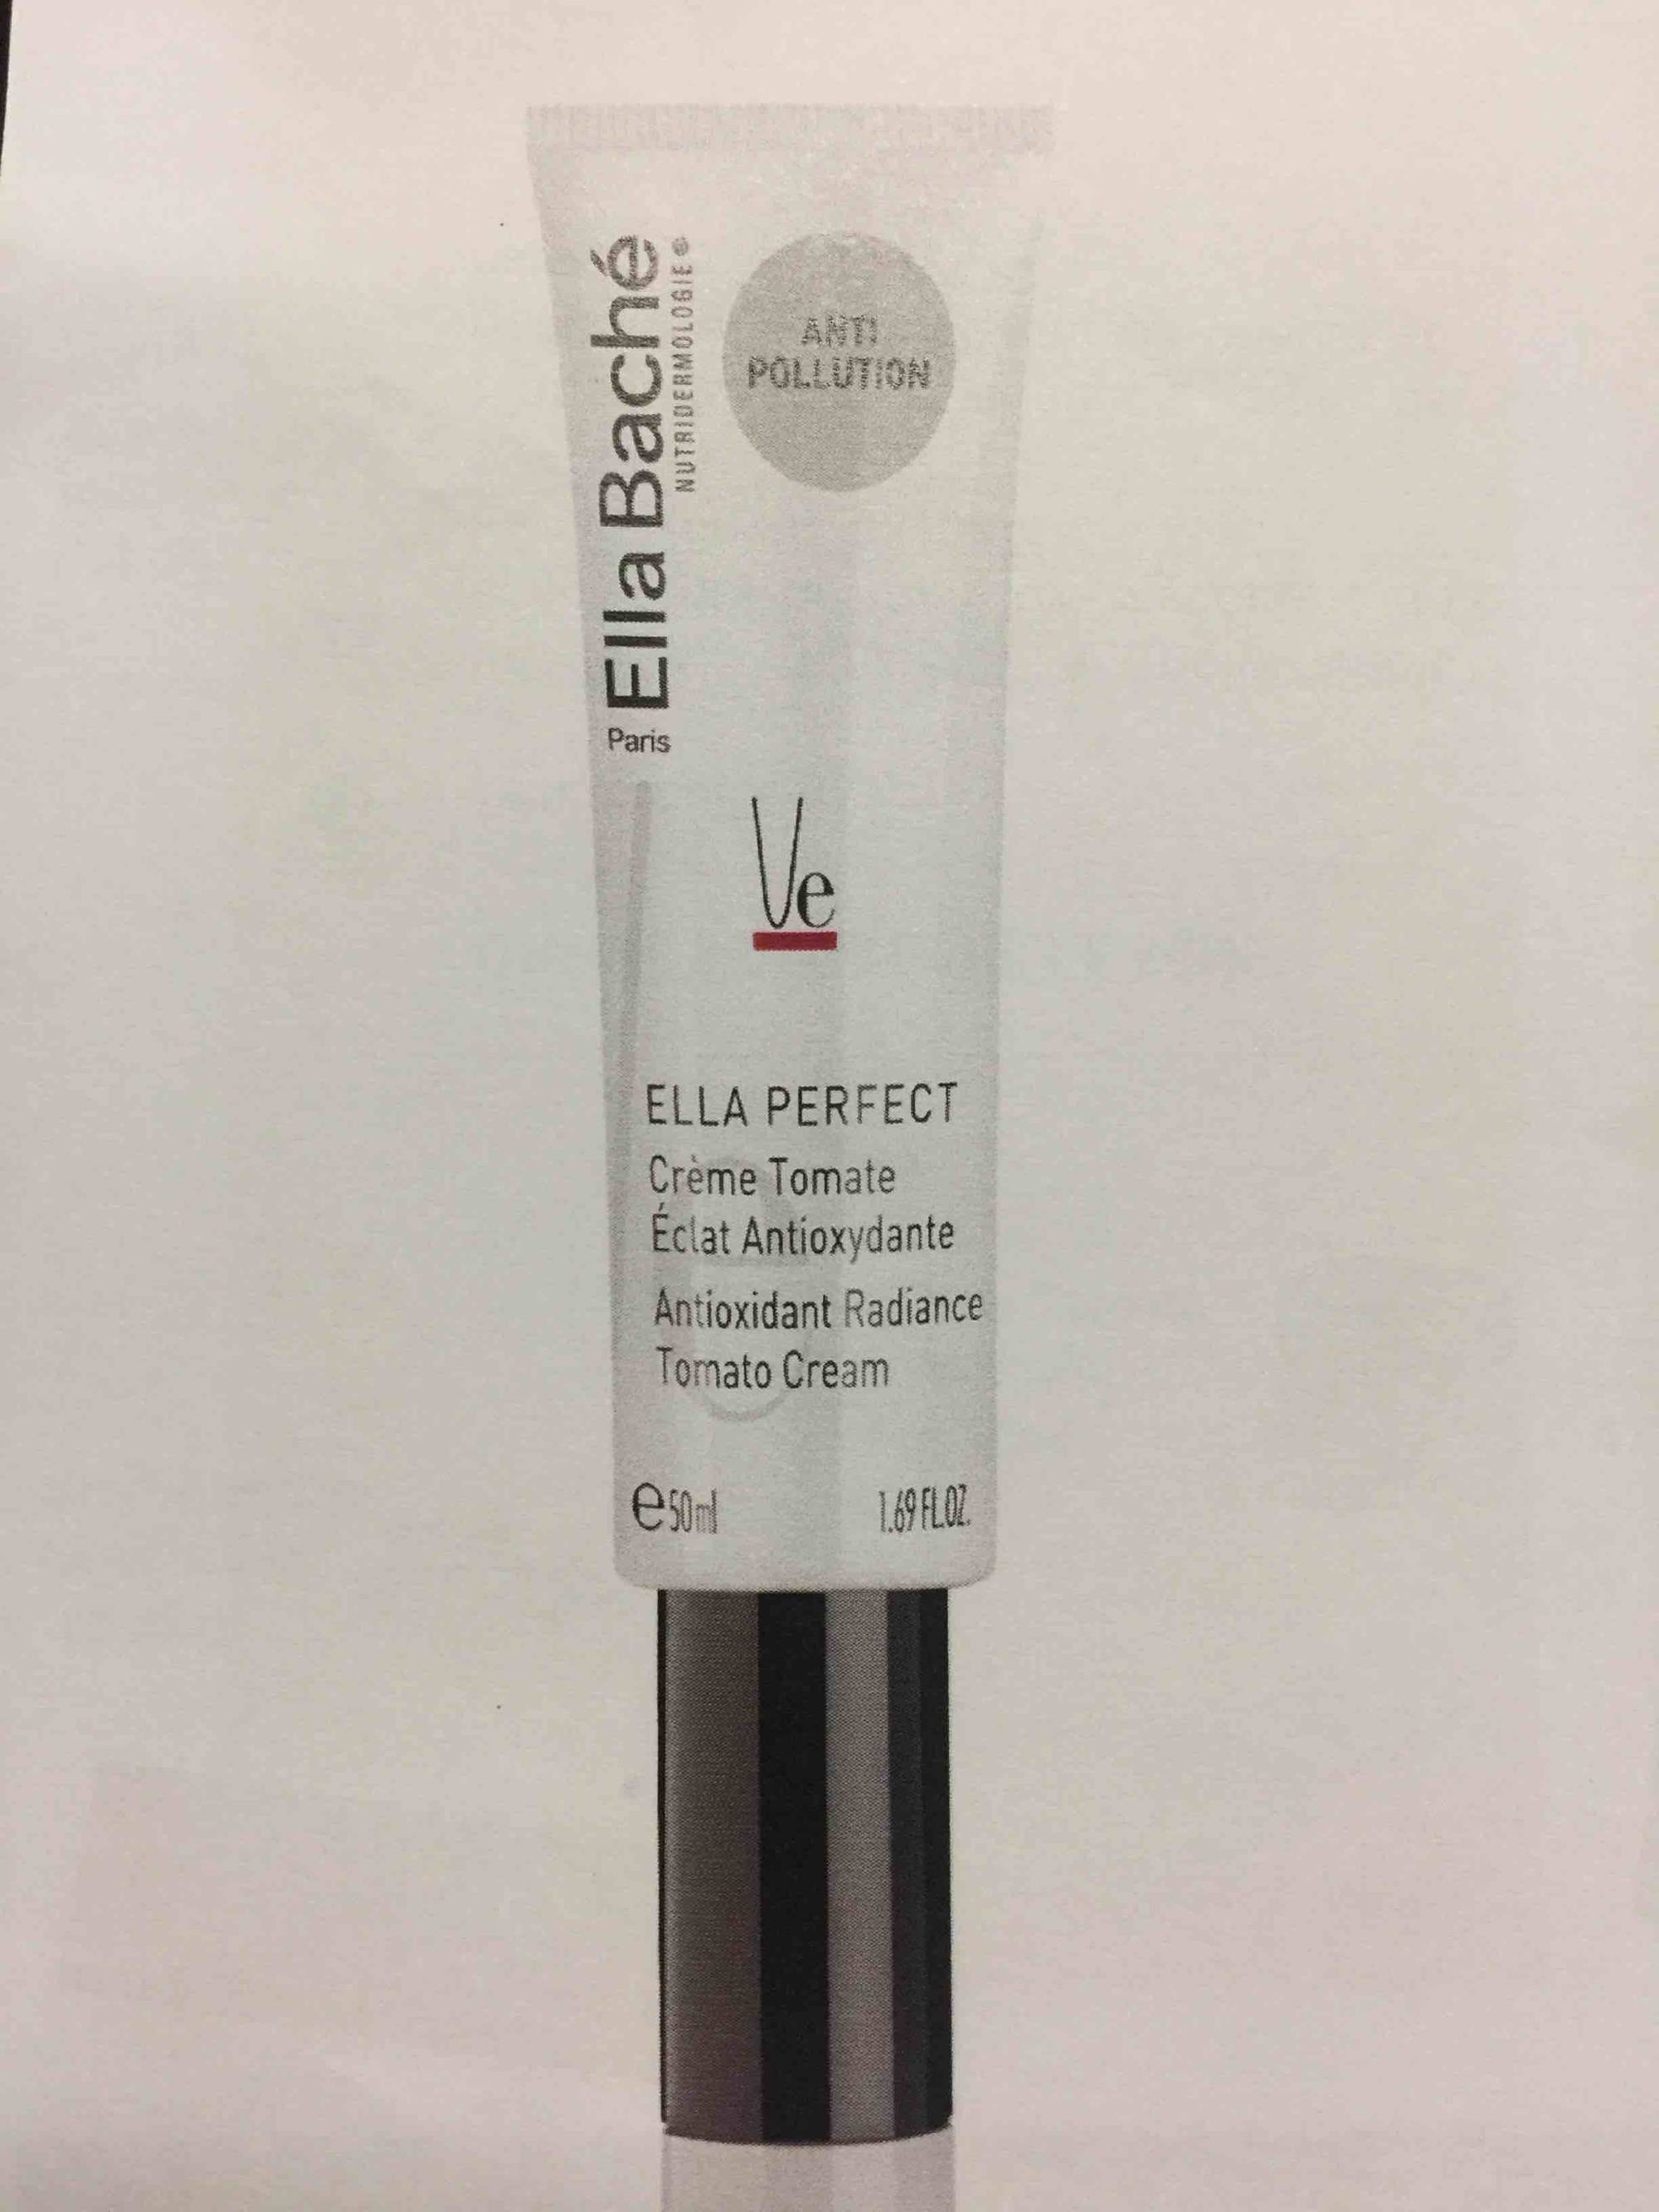 ELLA BACHE - Ella perfect - Crème tomate éclat antioxydante